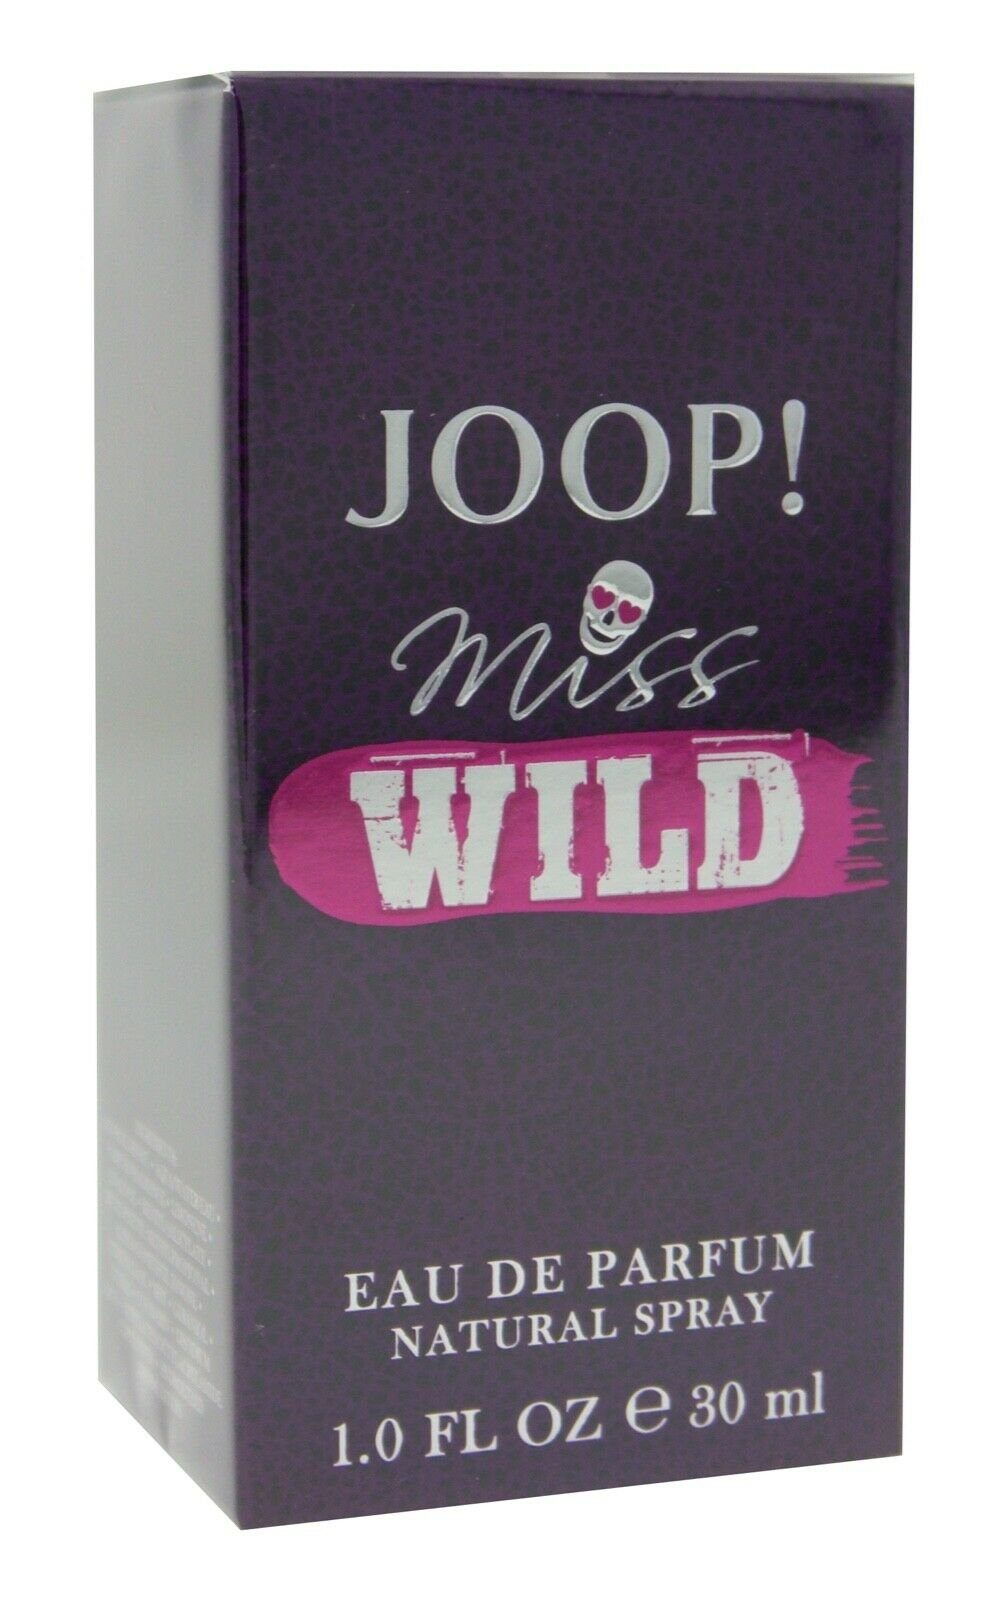 Joop! Eau de Parfum Joop! Miss Wild 30 ml Woman Eau de Parfum Spray Damen